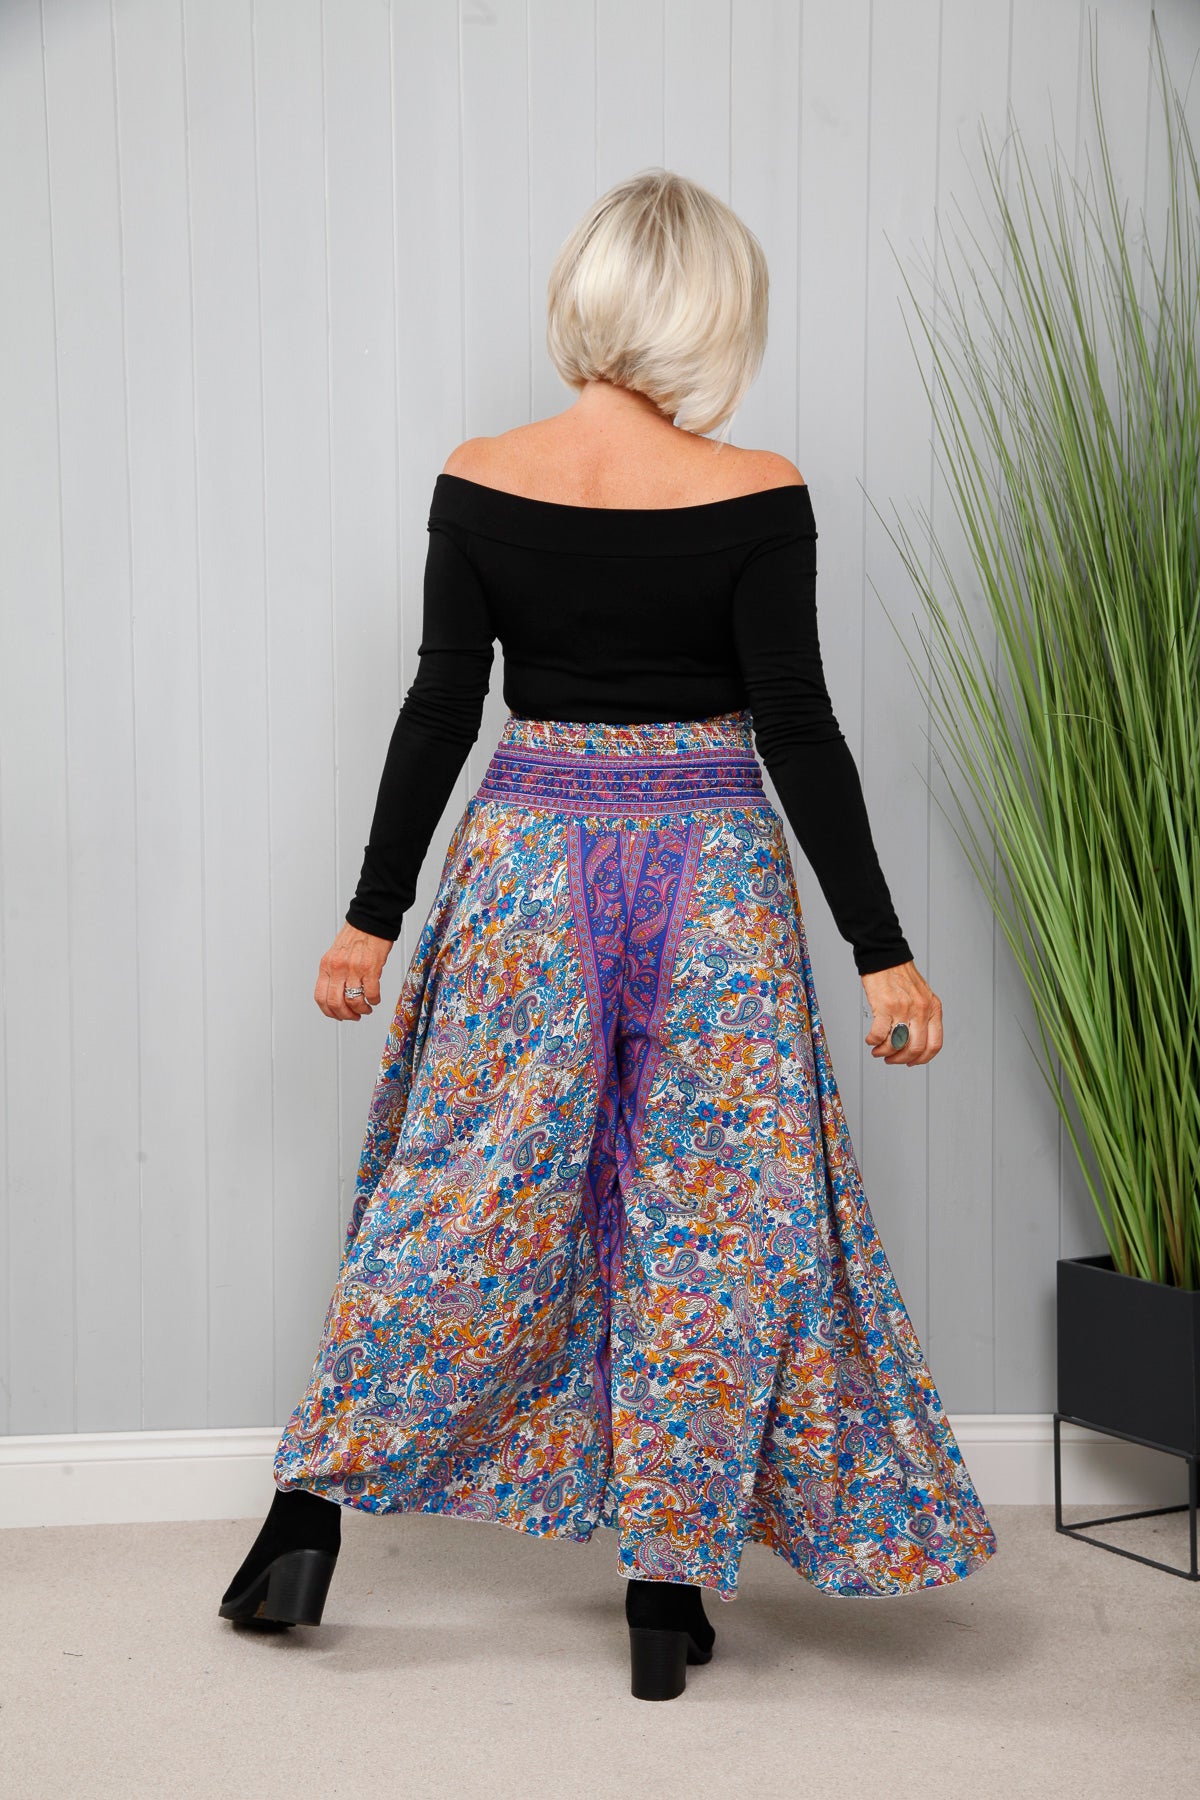 TIANNBU Womens Harem Trousers with Pockets : Amazon.co.uk: Fashion